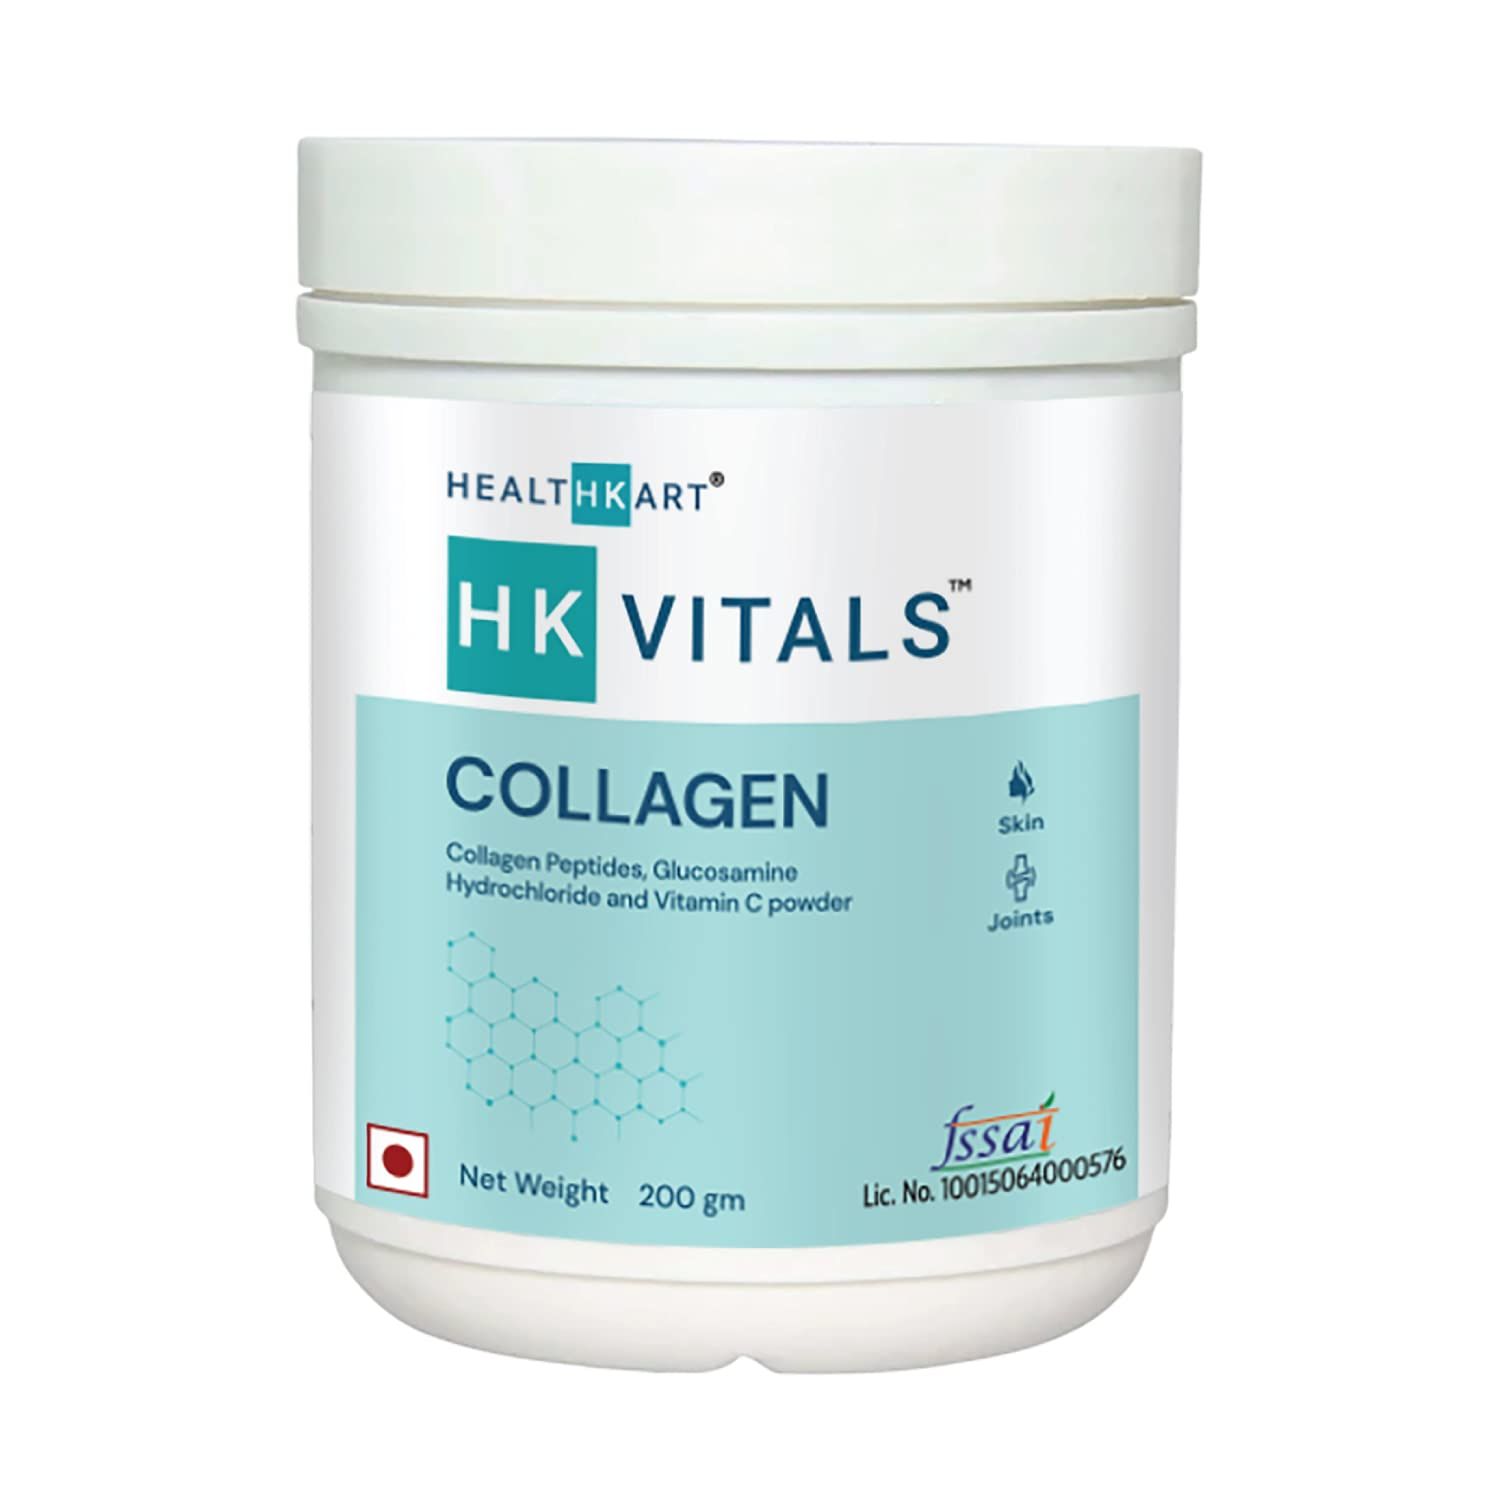 HK Vitals Collagen Image